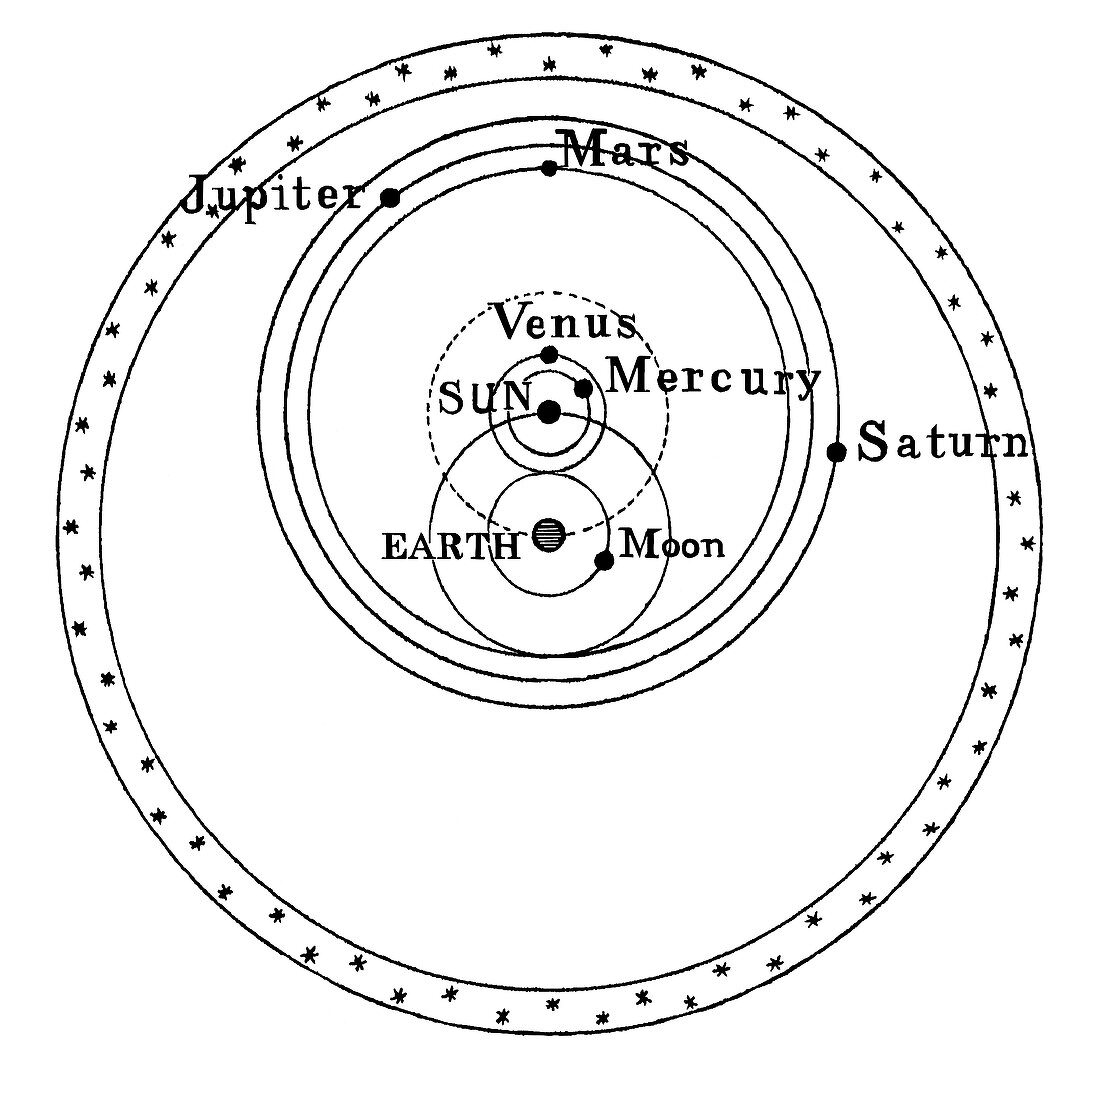 Tychonic cosmology